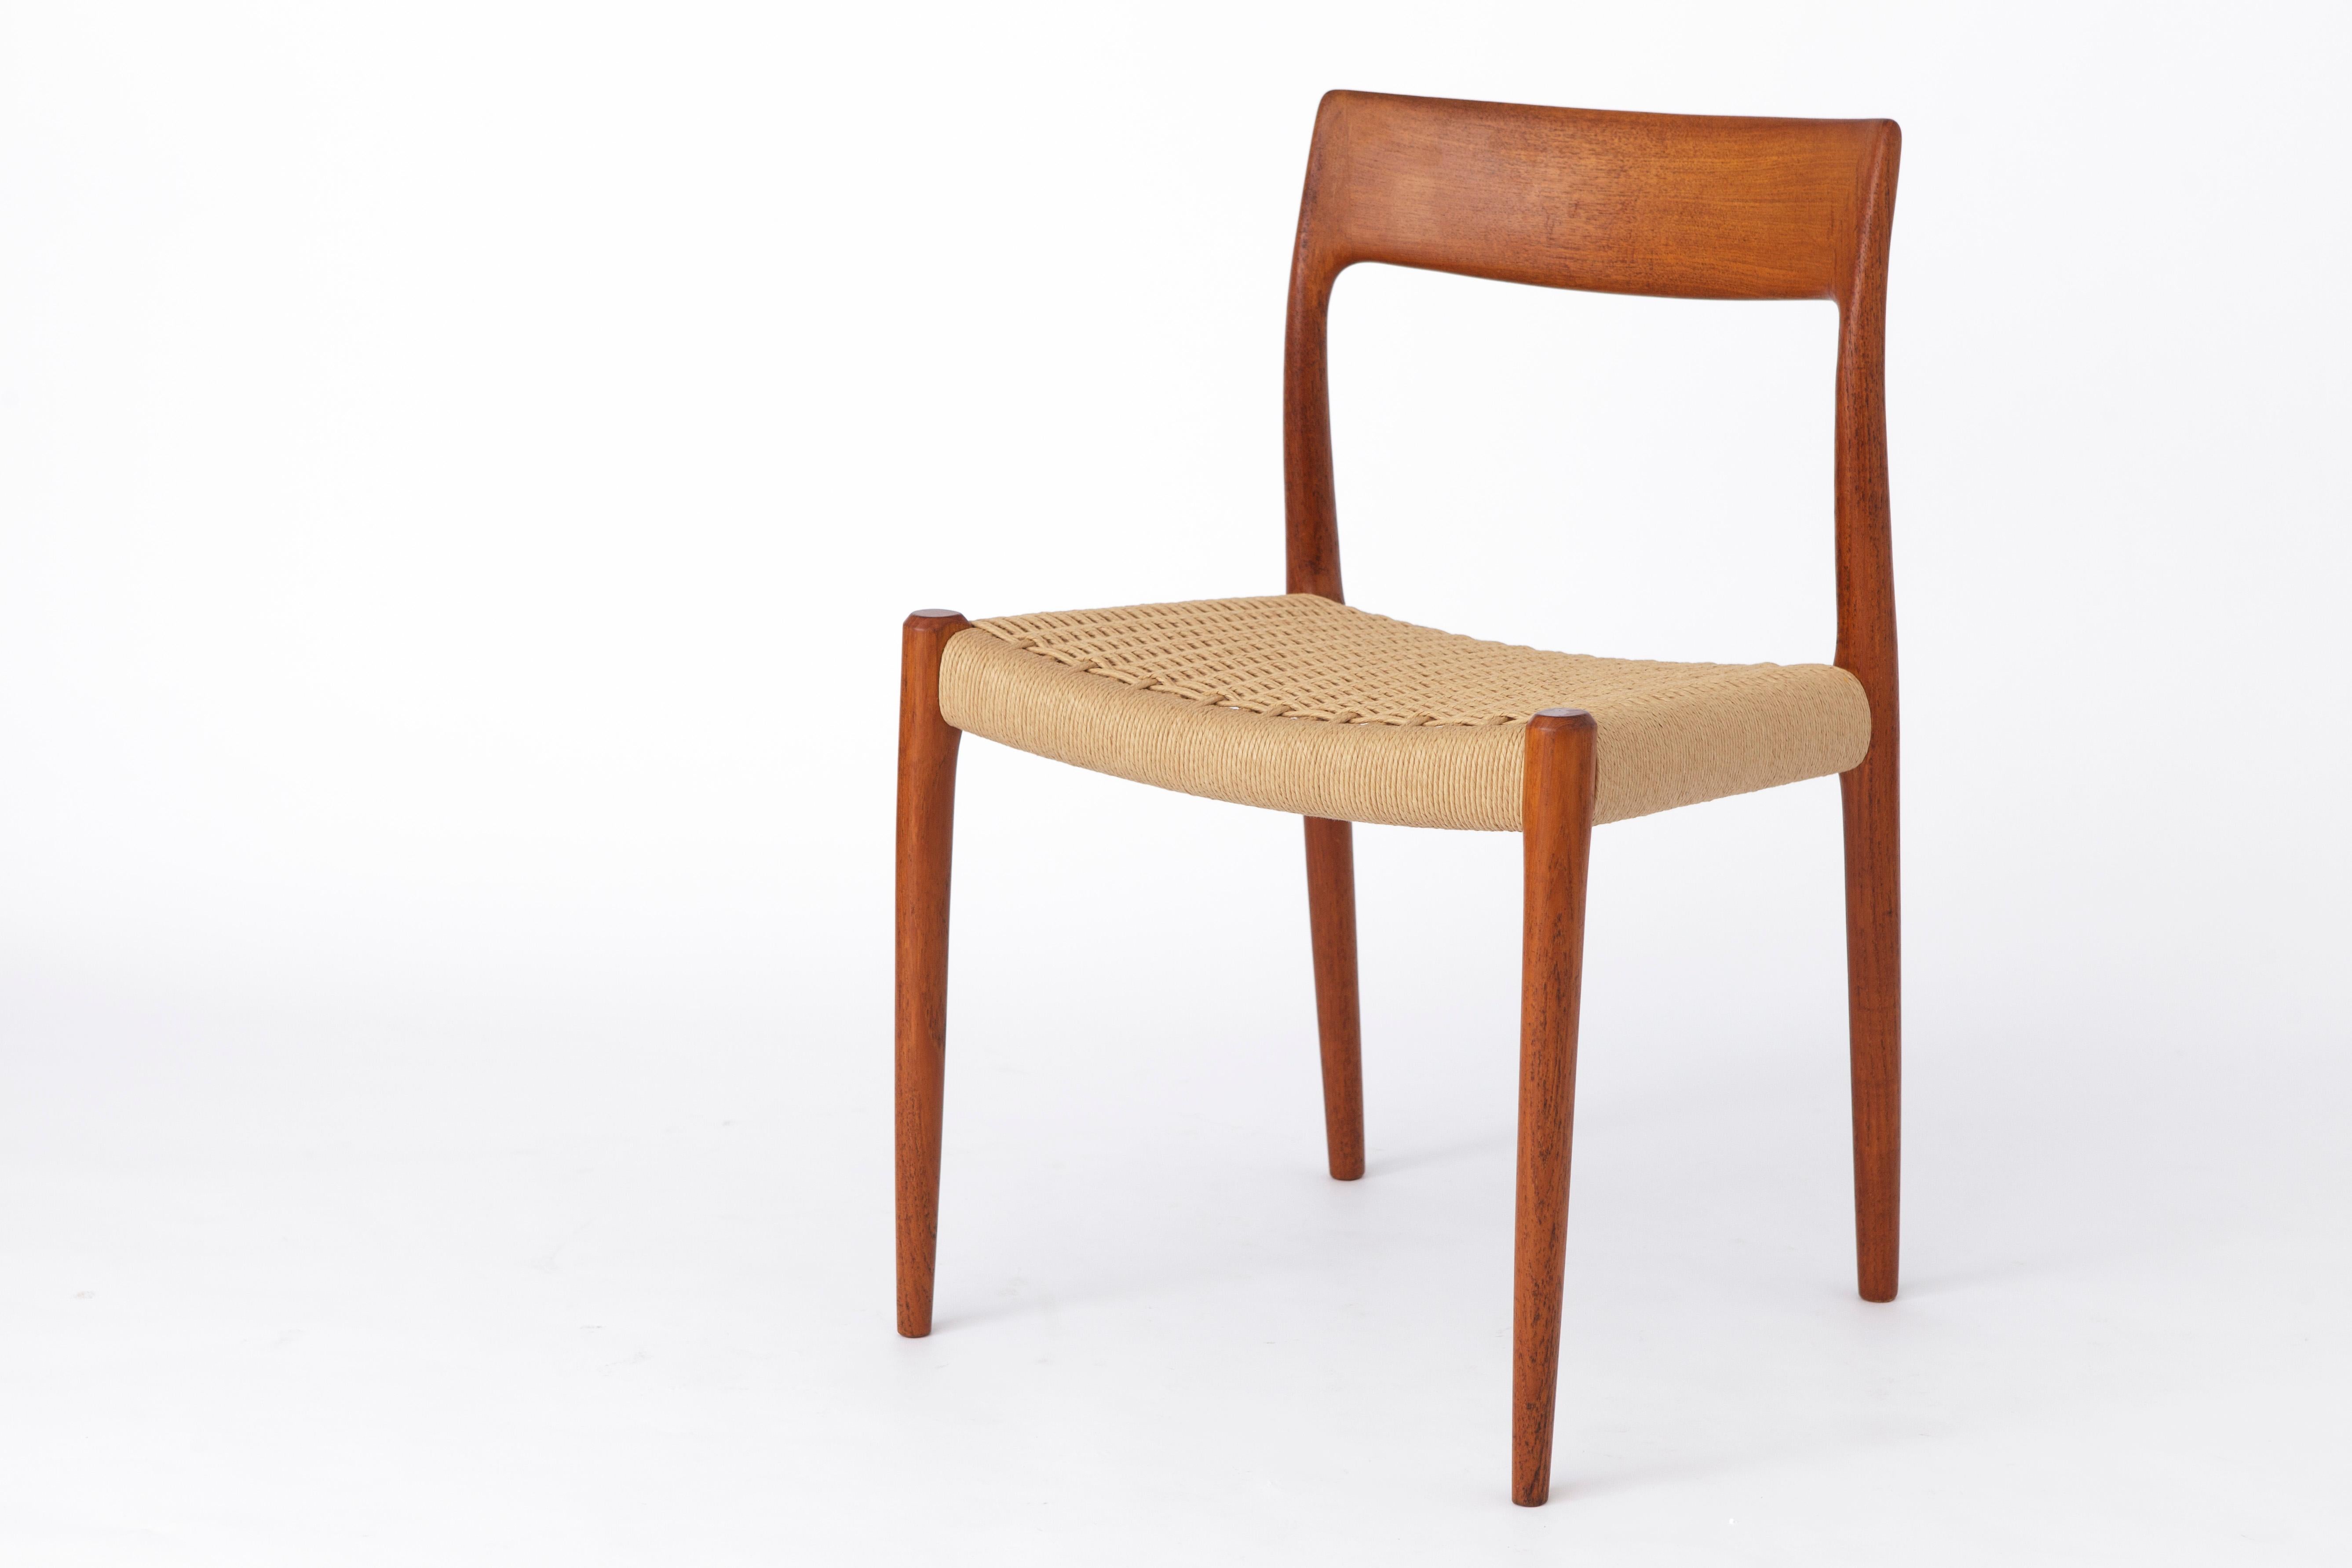 Polished 1 of 3 Niels Moller Chairs, model 77, Teak, 1950s Vintage